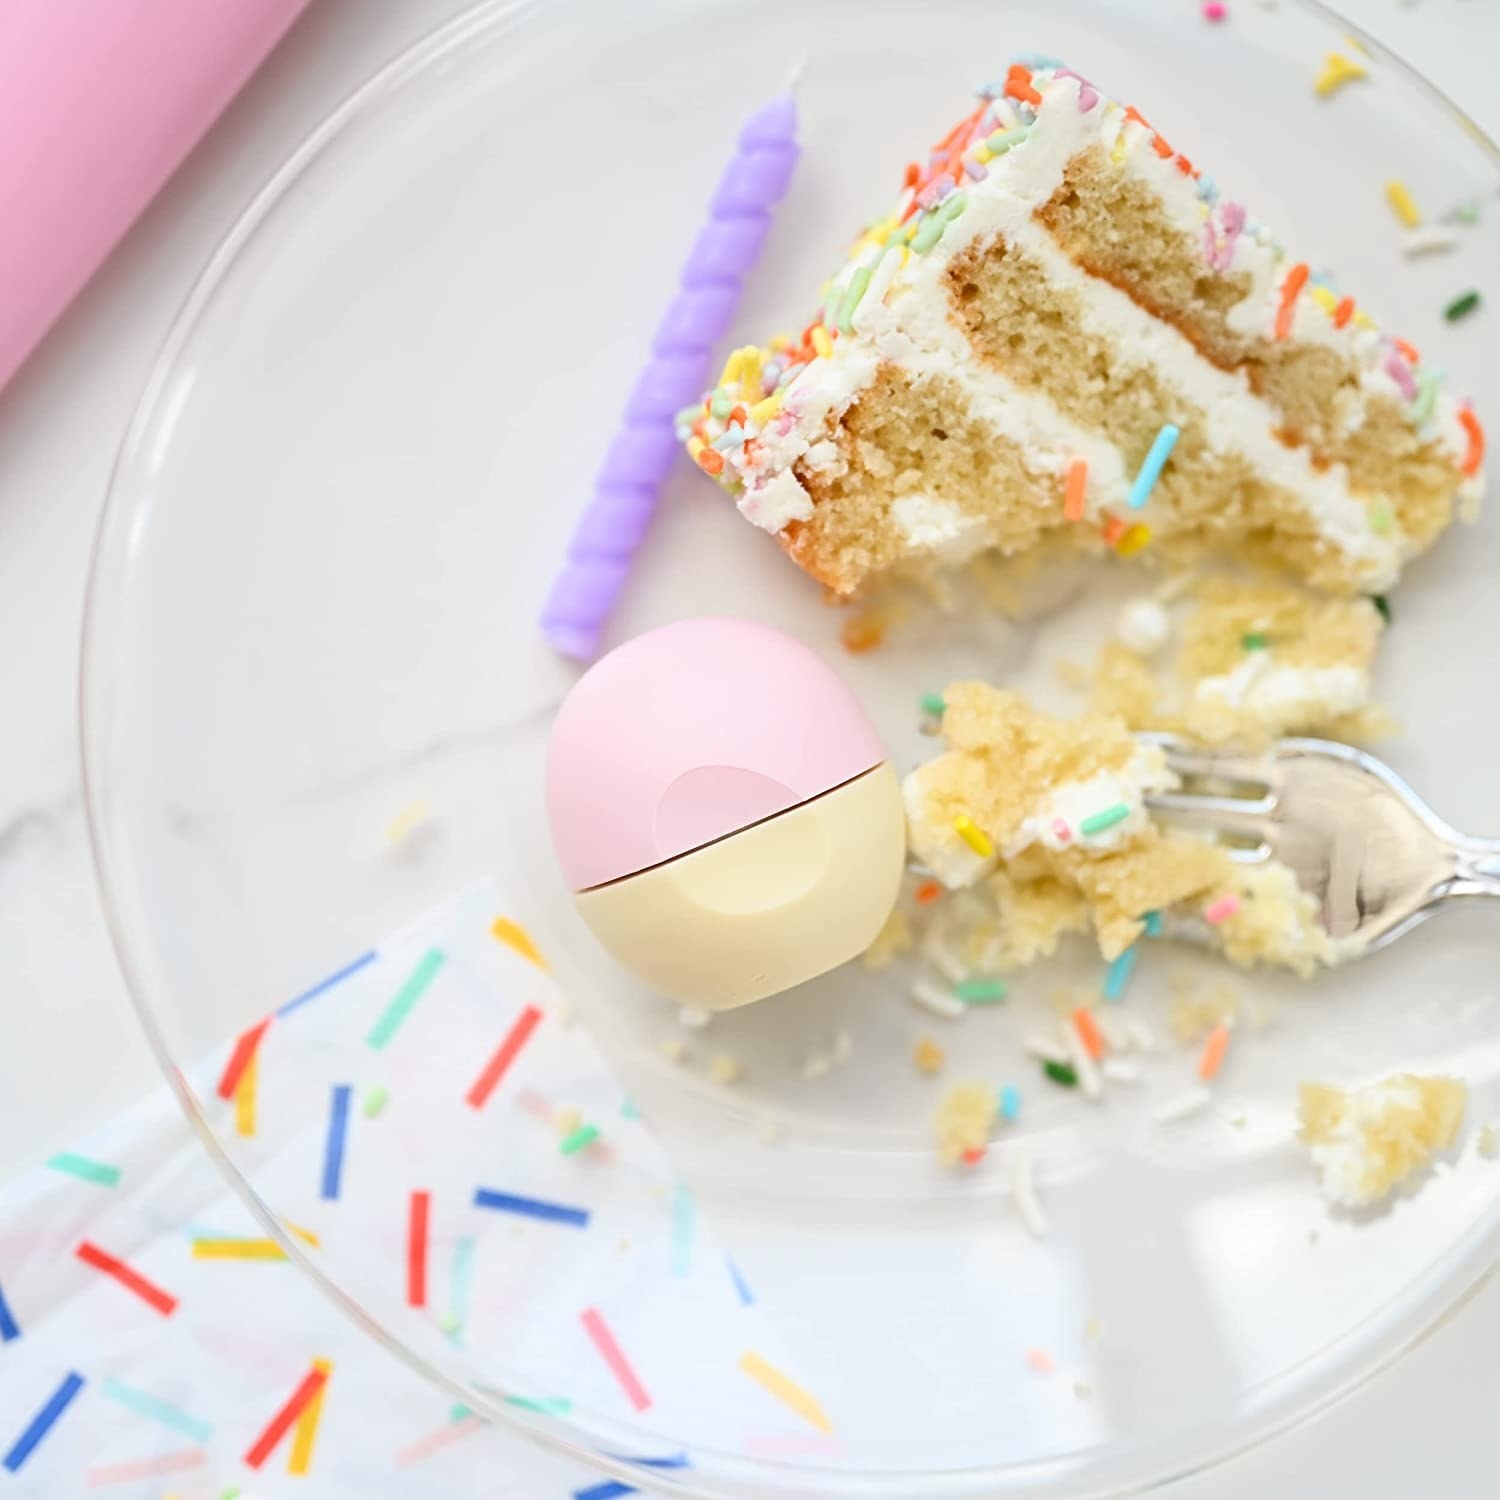 a lip balm on a plate next to birthday cake